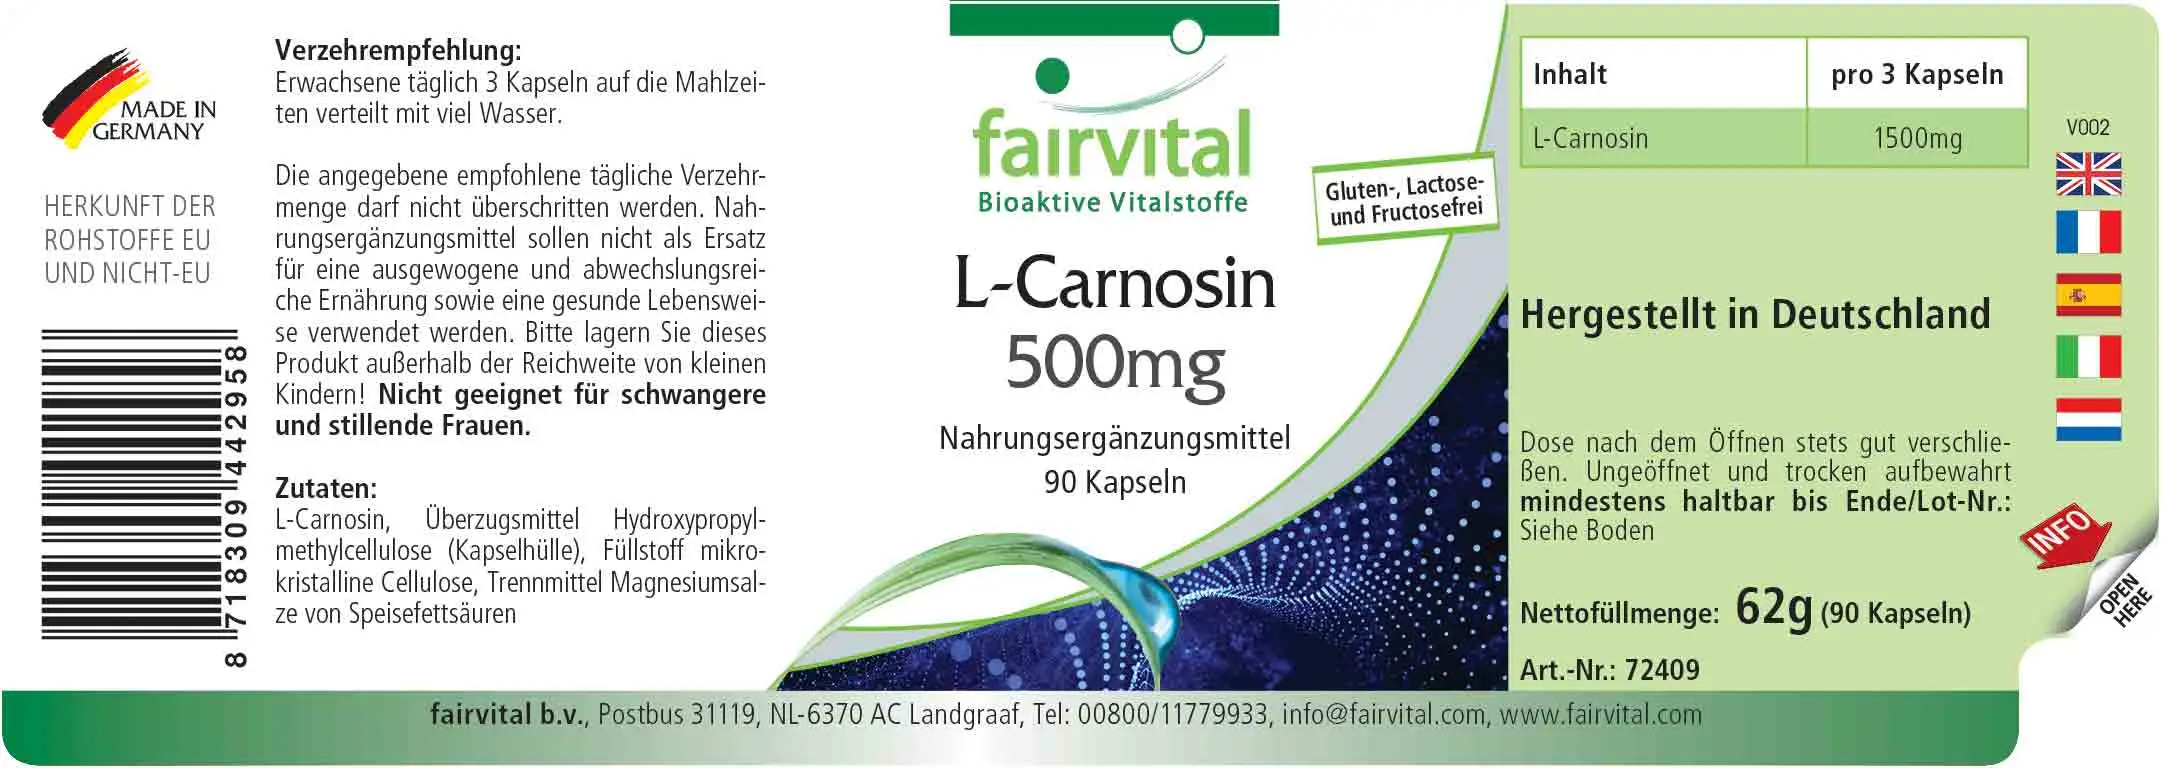 L-Carnosina 500mg - 90 Cápsulas